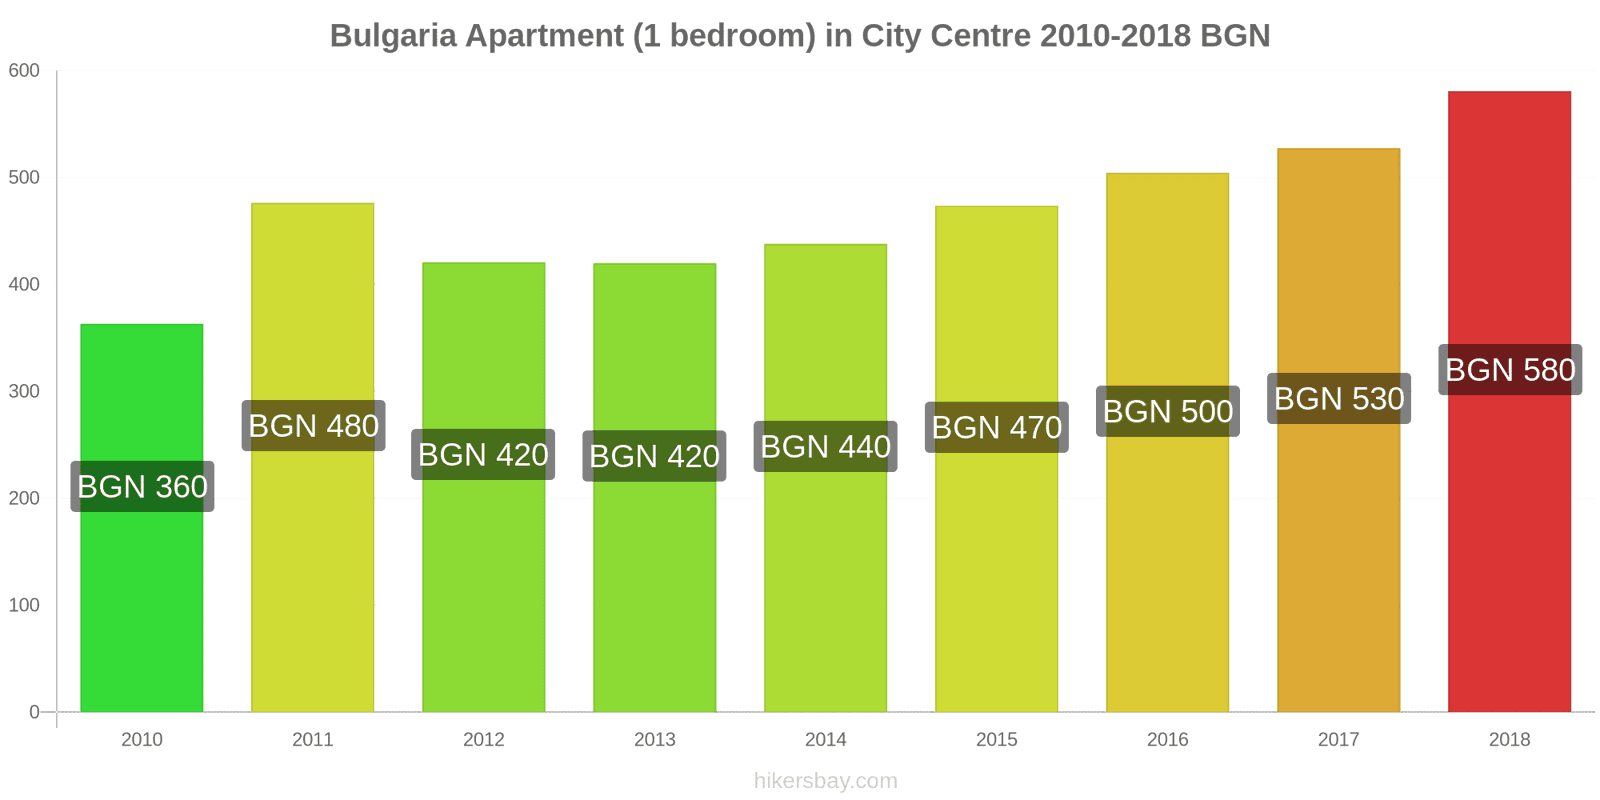 Bulgaria price changes Apartment (1 bedroom) in city centre hikersbay.com